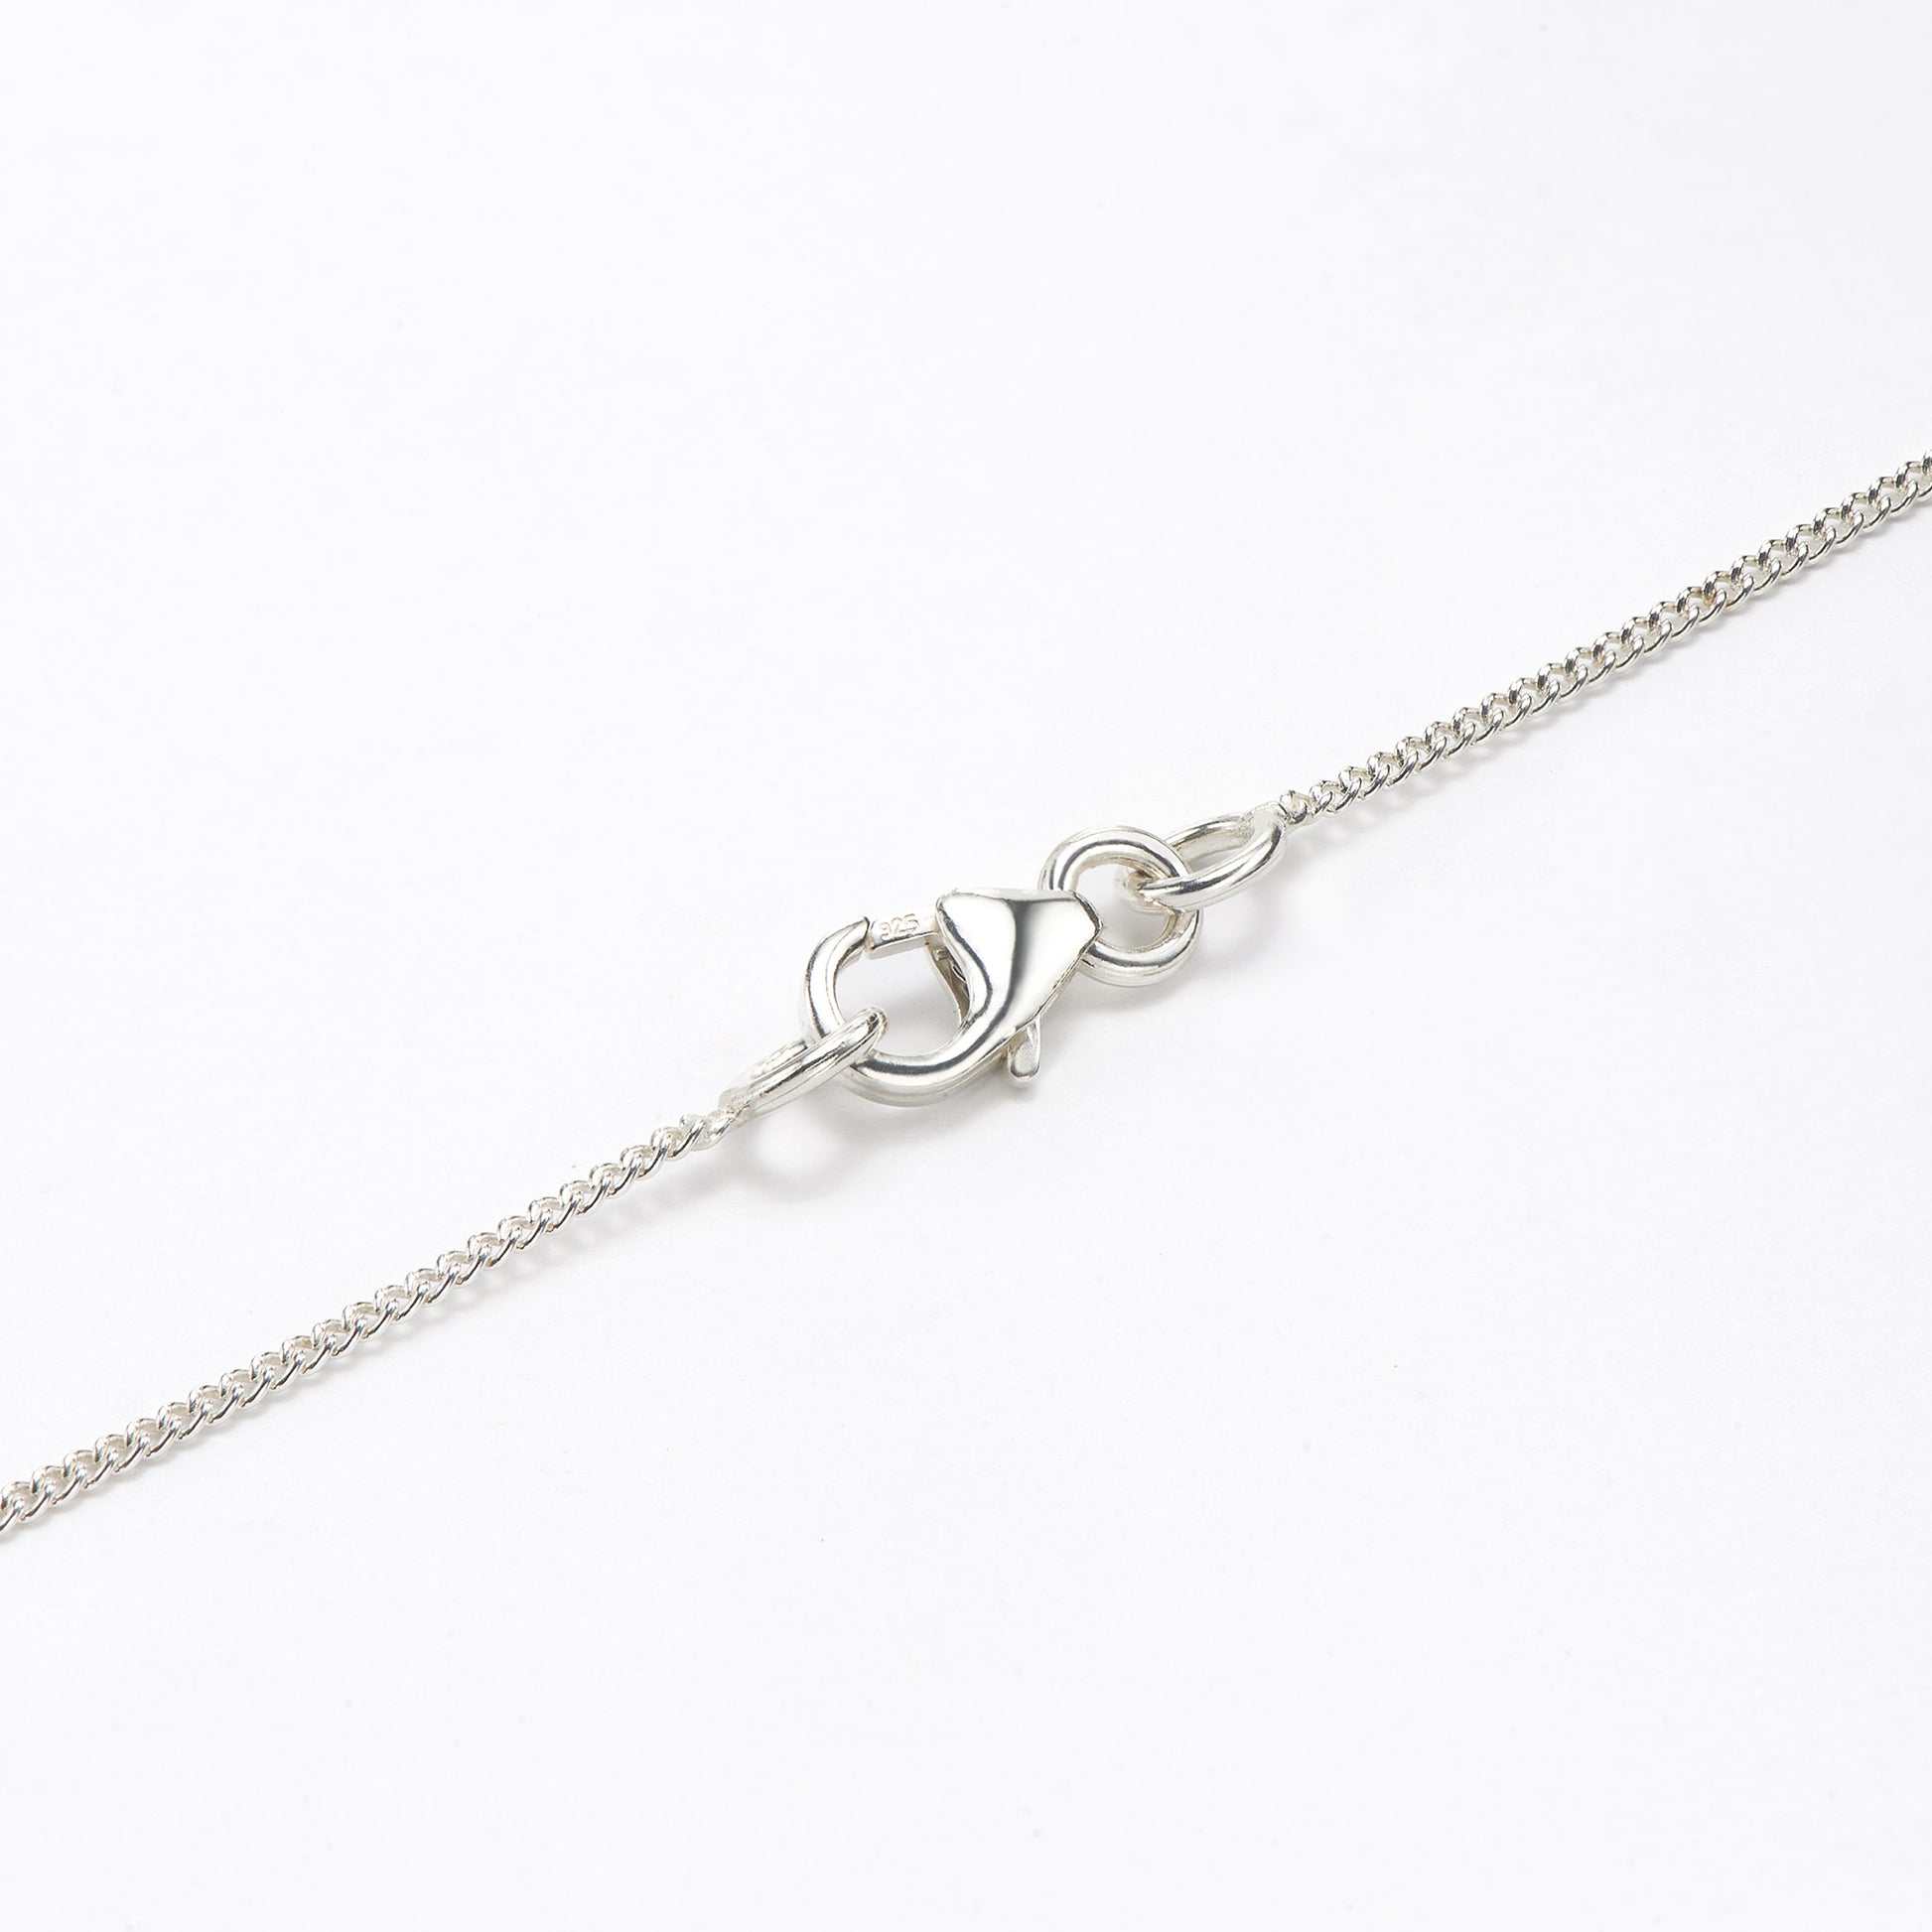 925 silver chain clasp on white background showing super fine silver chain